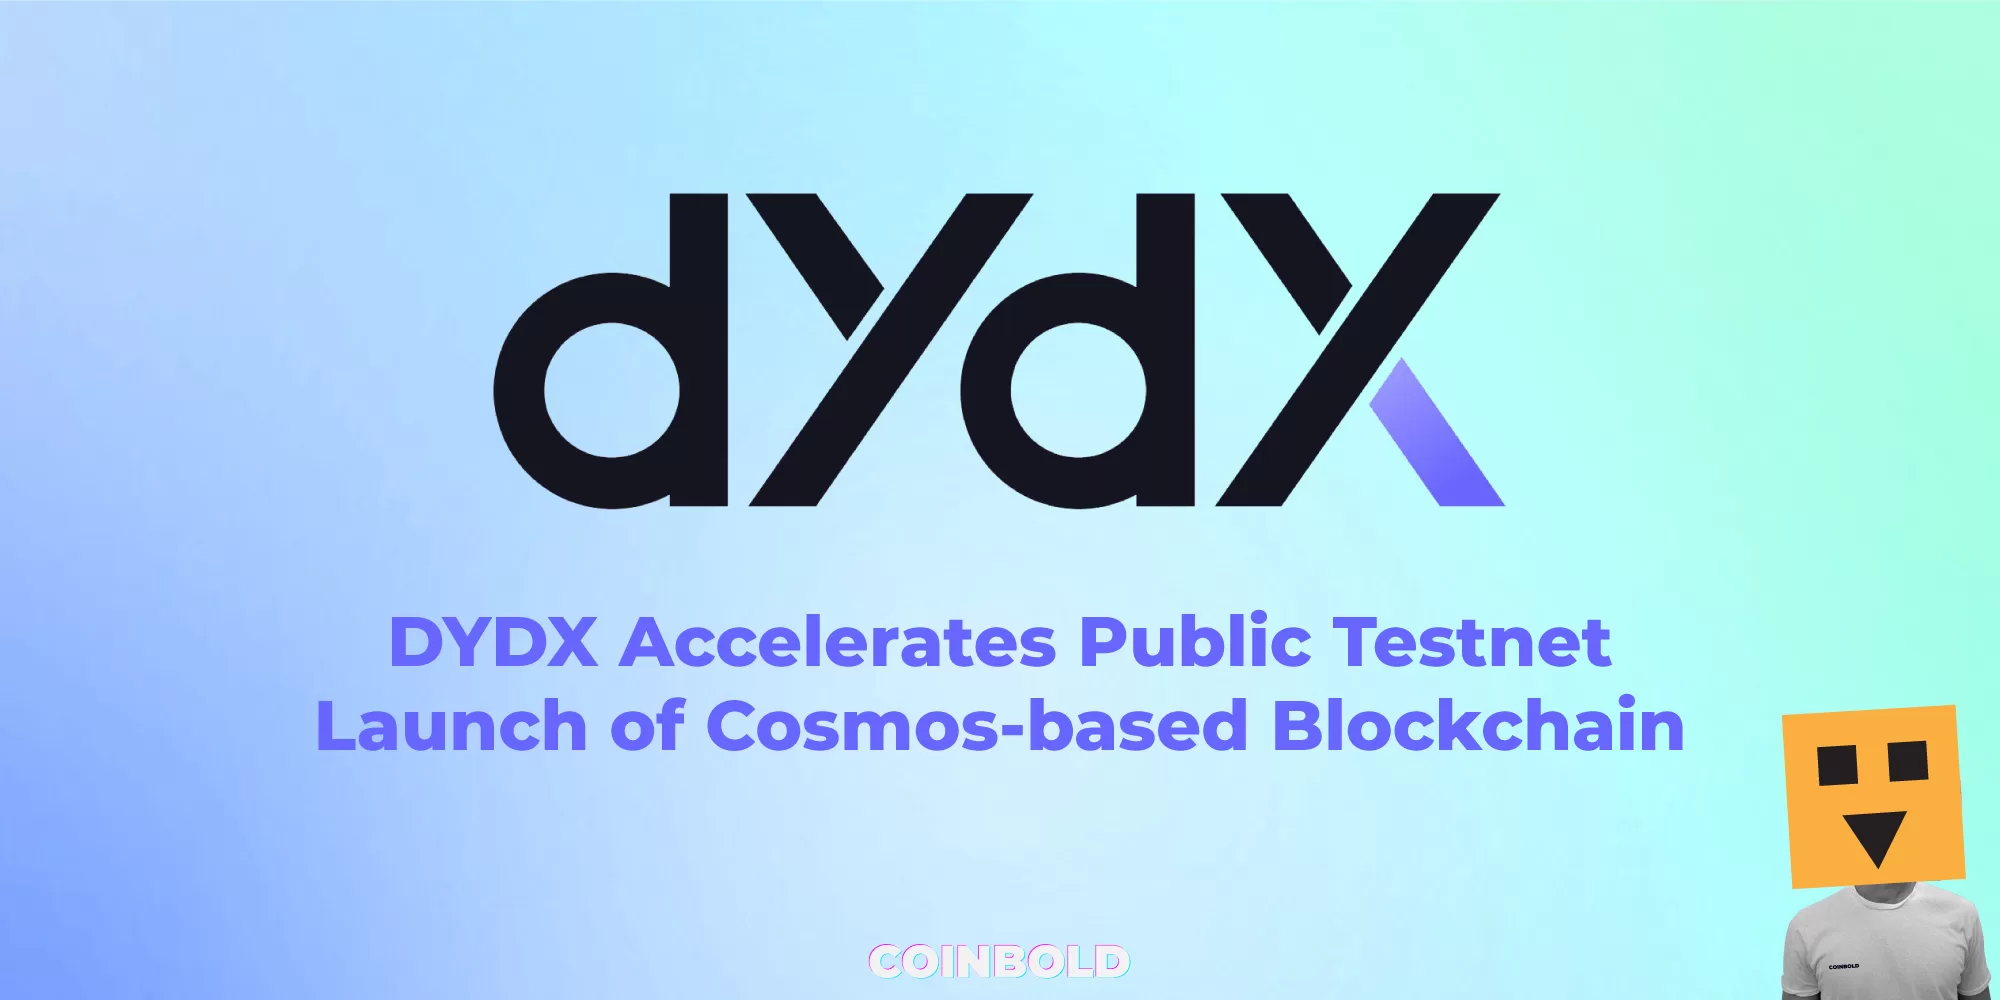 DYDX Accelerates Public Testnet Launch of Cosmos-based Blockchain